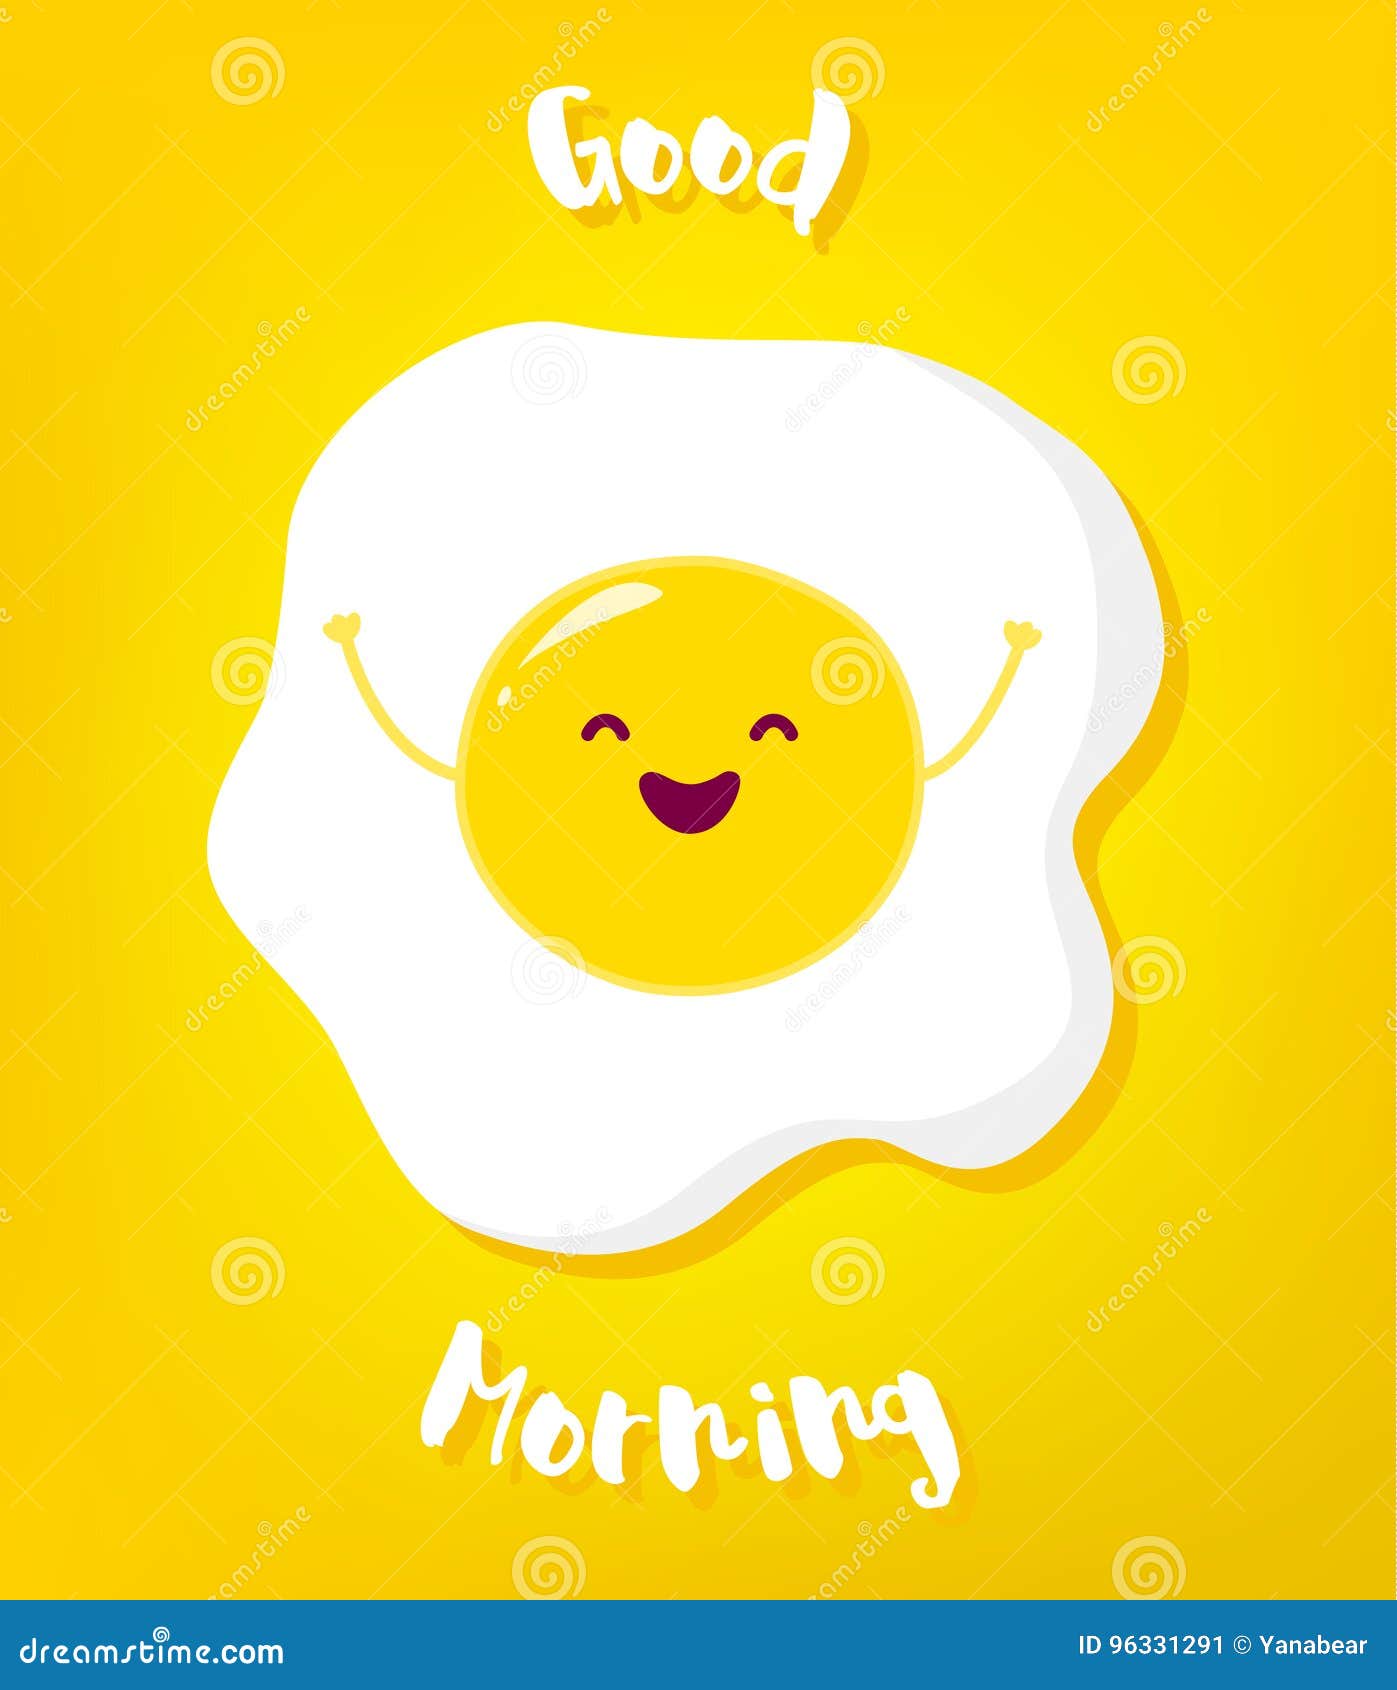 Cartoon Fried Egg Raises Hands and Smiles. Good Morning Vector Card ...